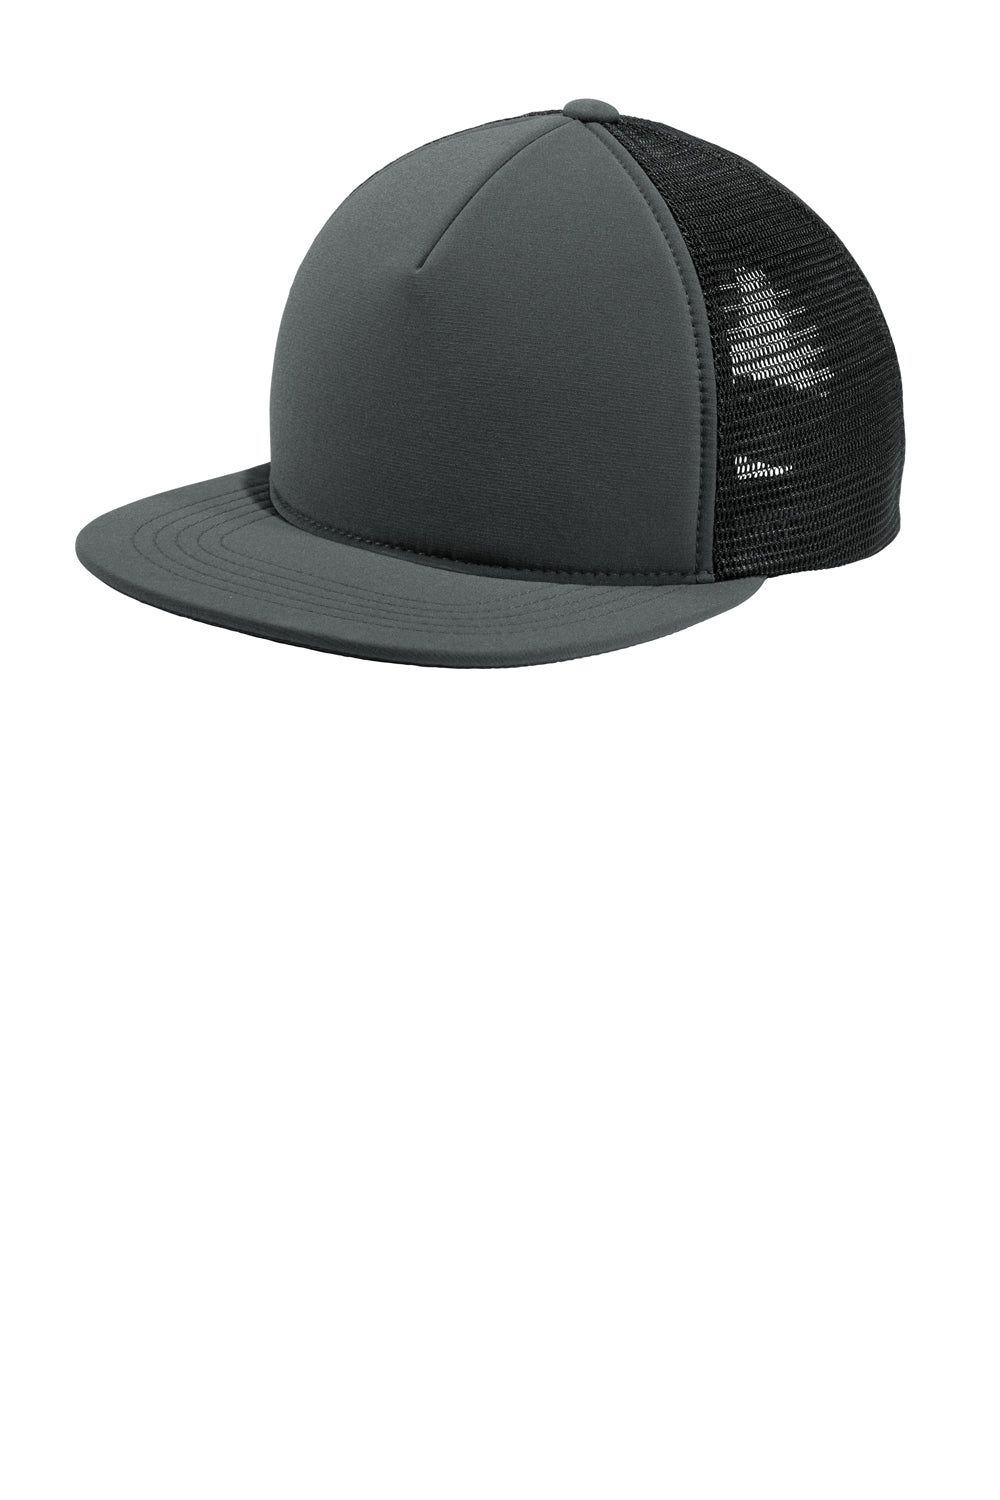 Port Authority C937 Foam Outdoor Felxfit Adjustable Hat Graphite Grey/Black Front